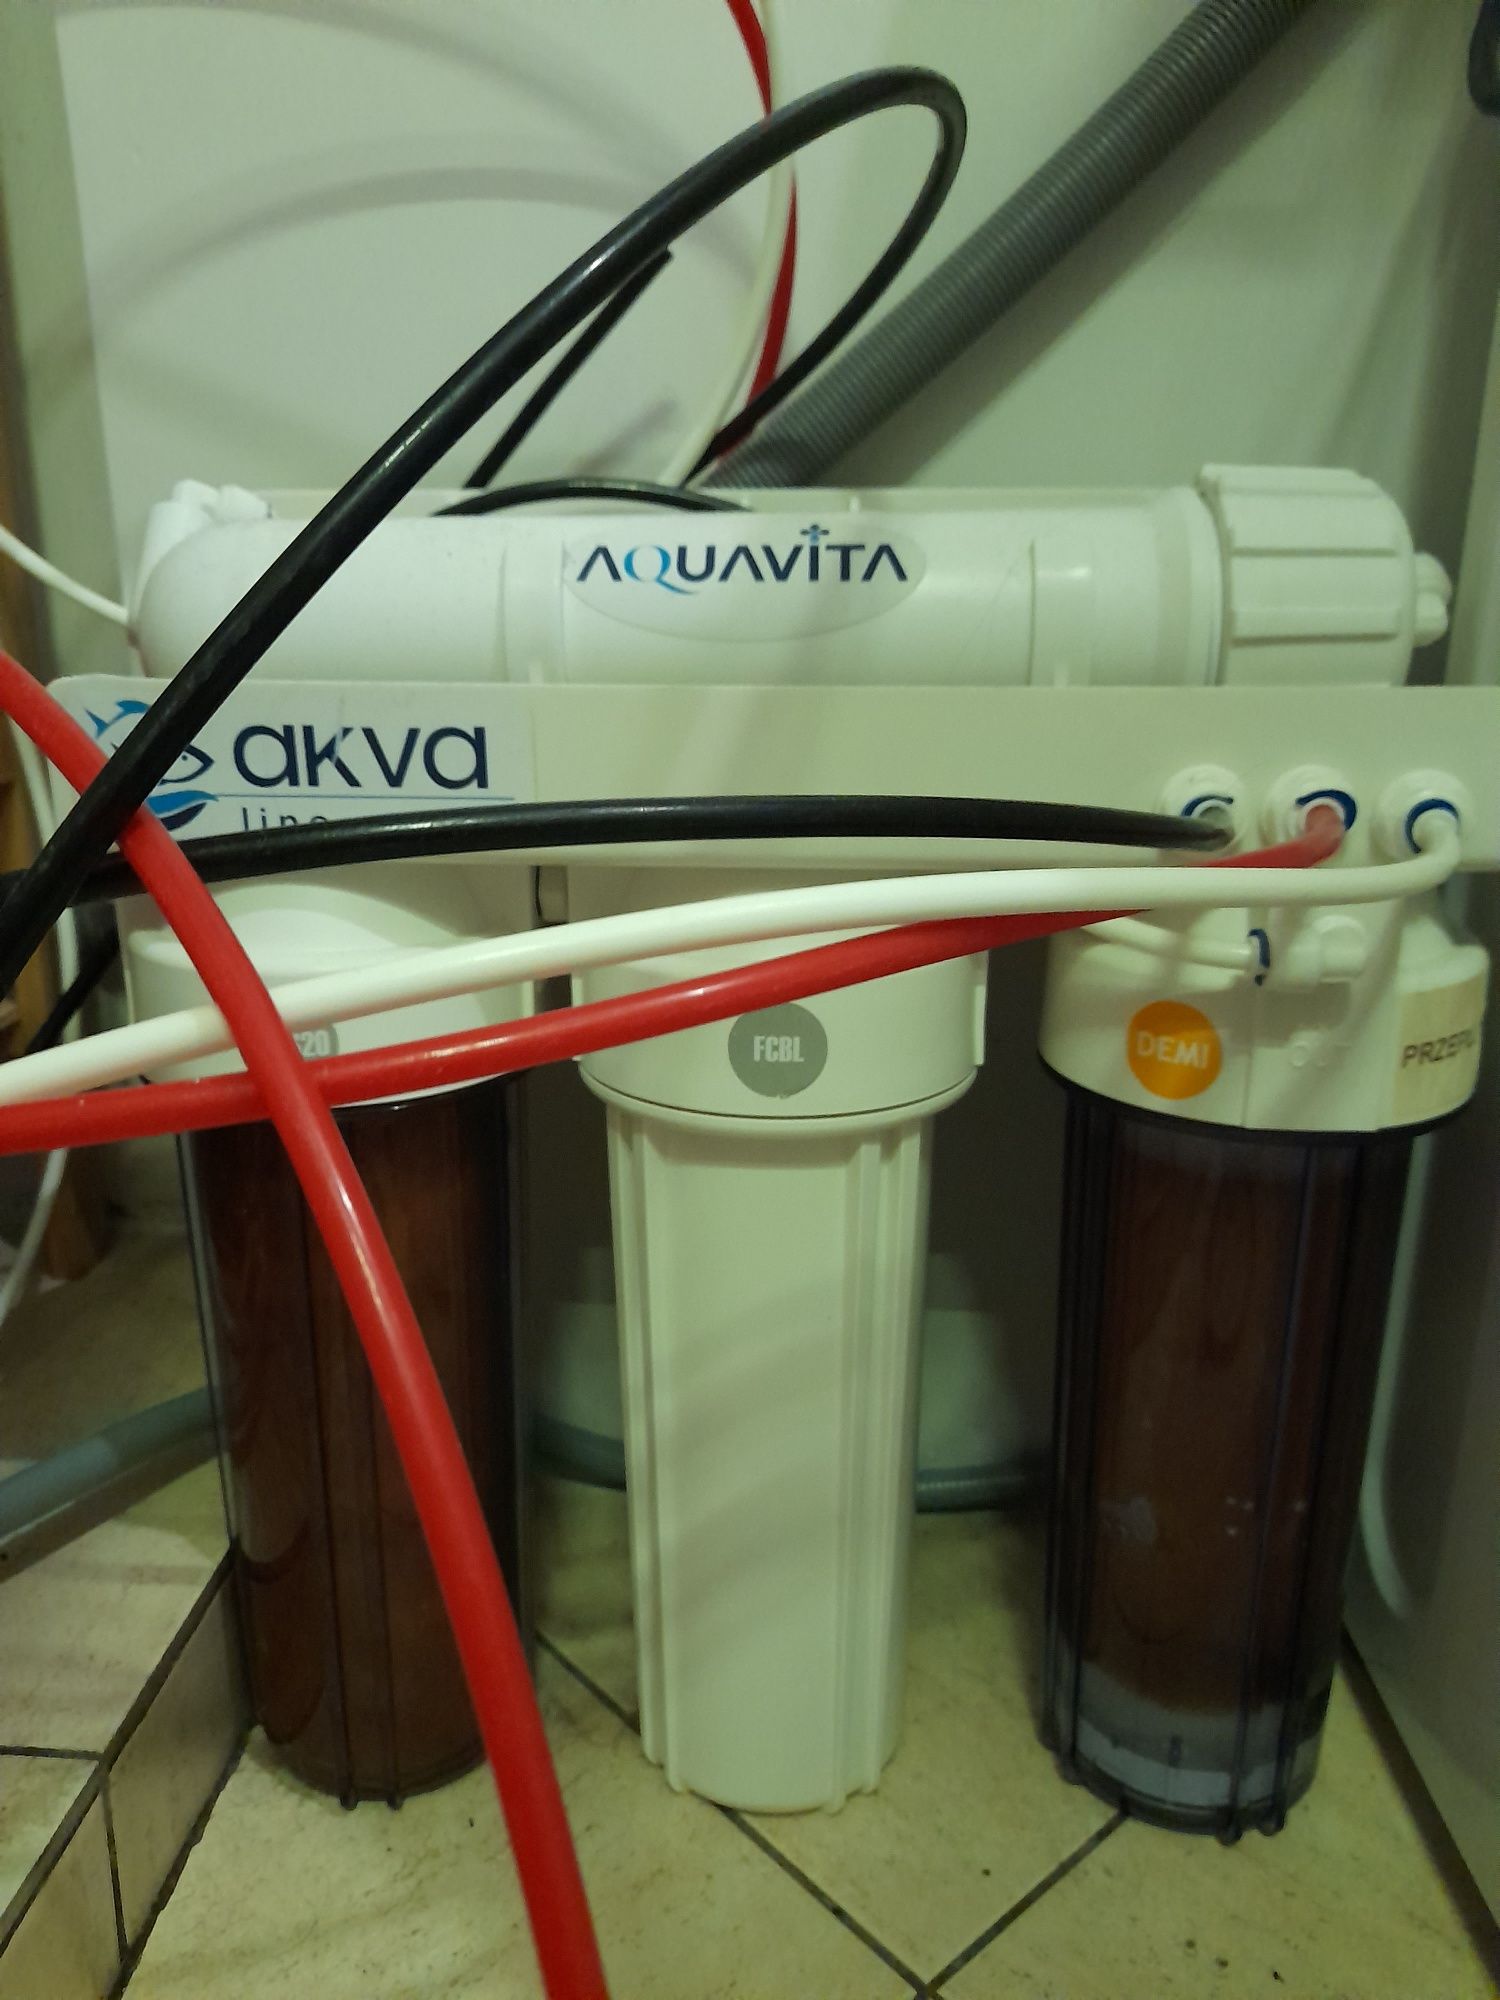 Aquavita akva line filtr dowróconej osmozy